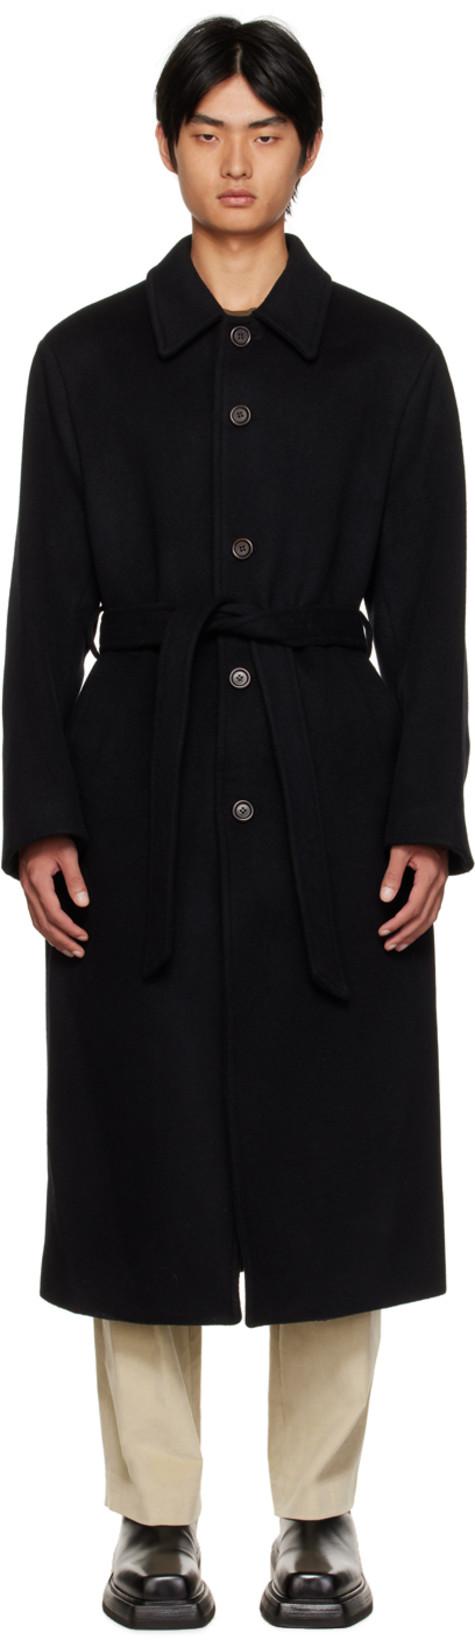 Black Single-Breasted Coat by AMOMENTO